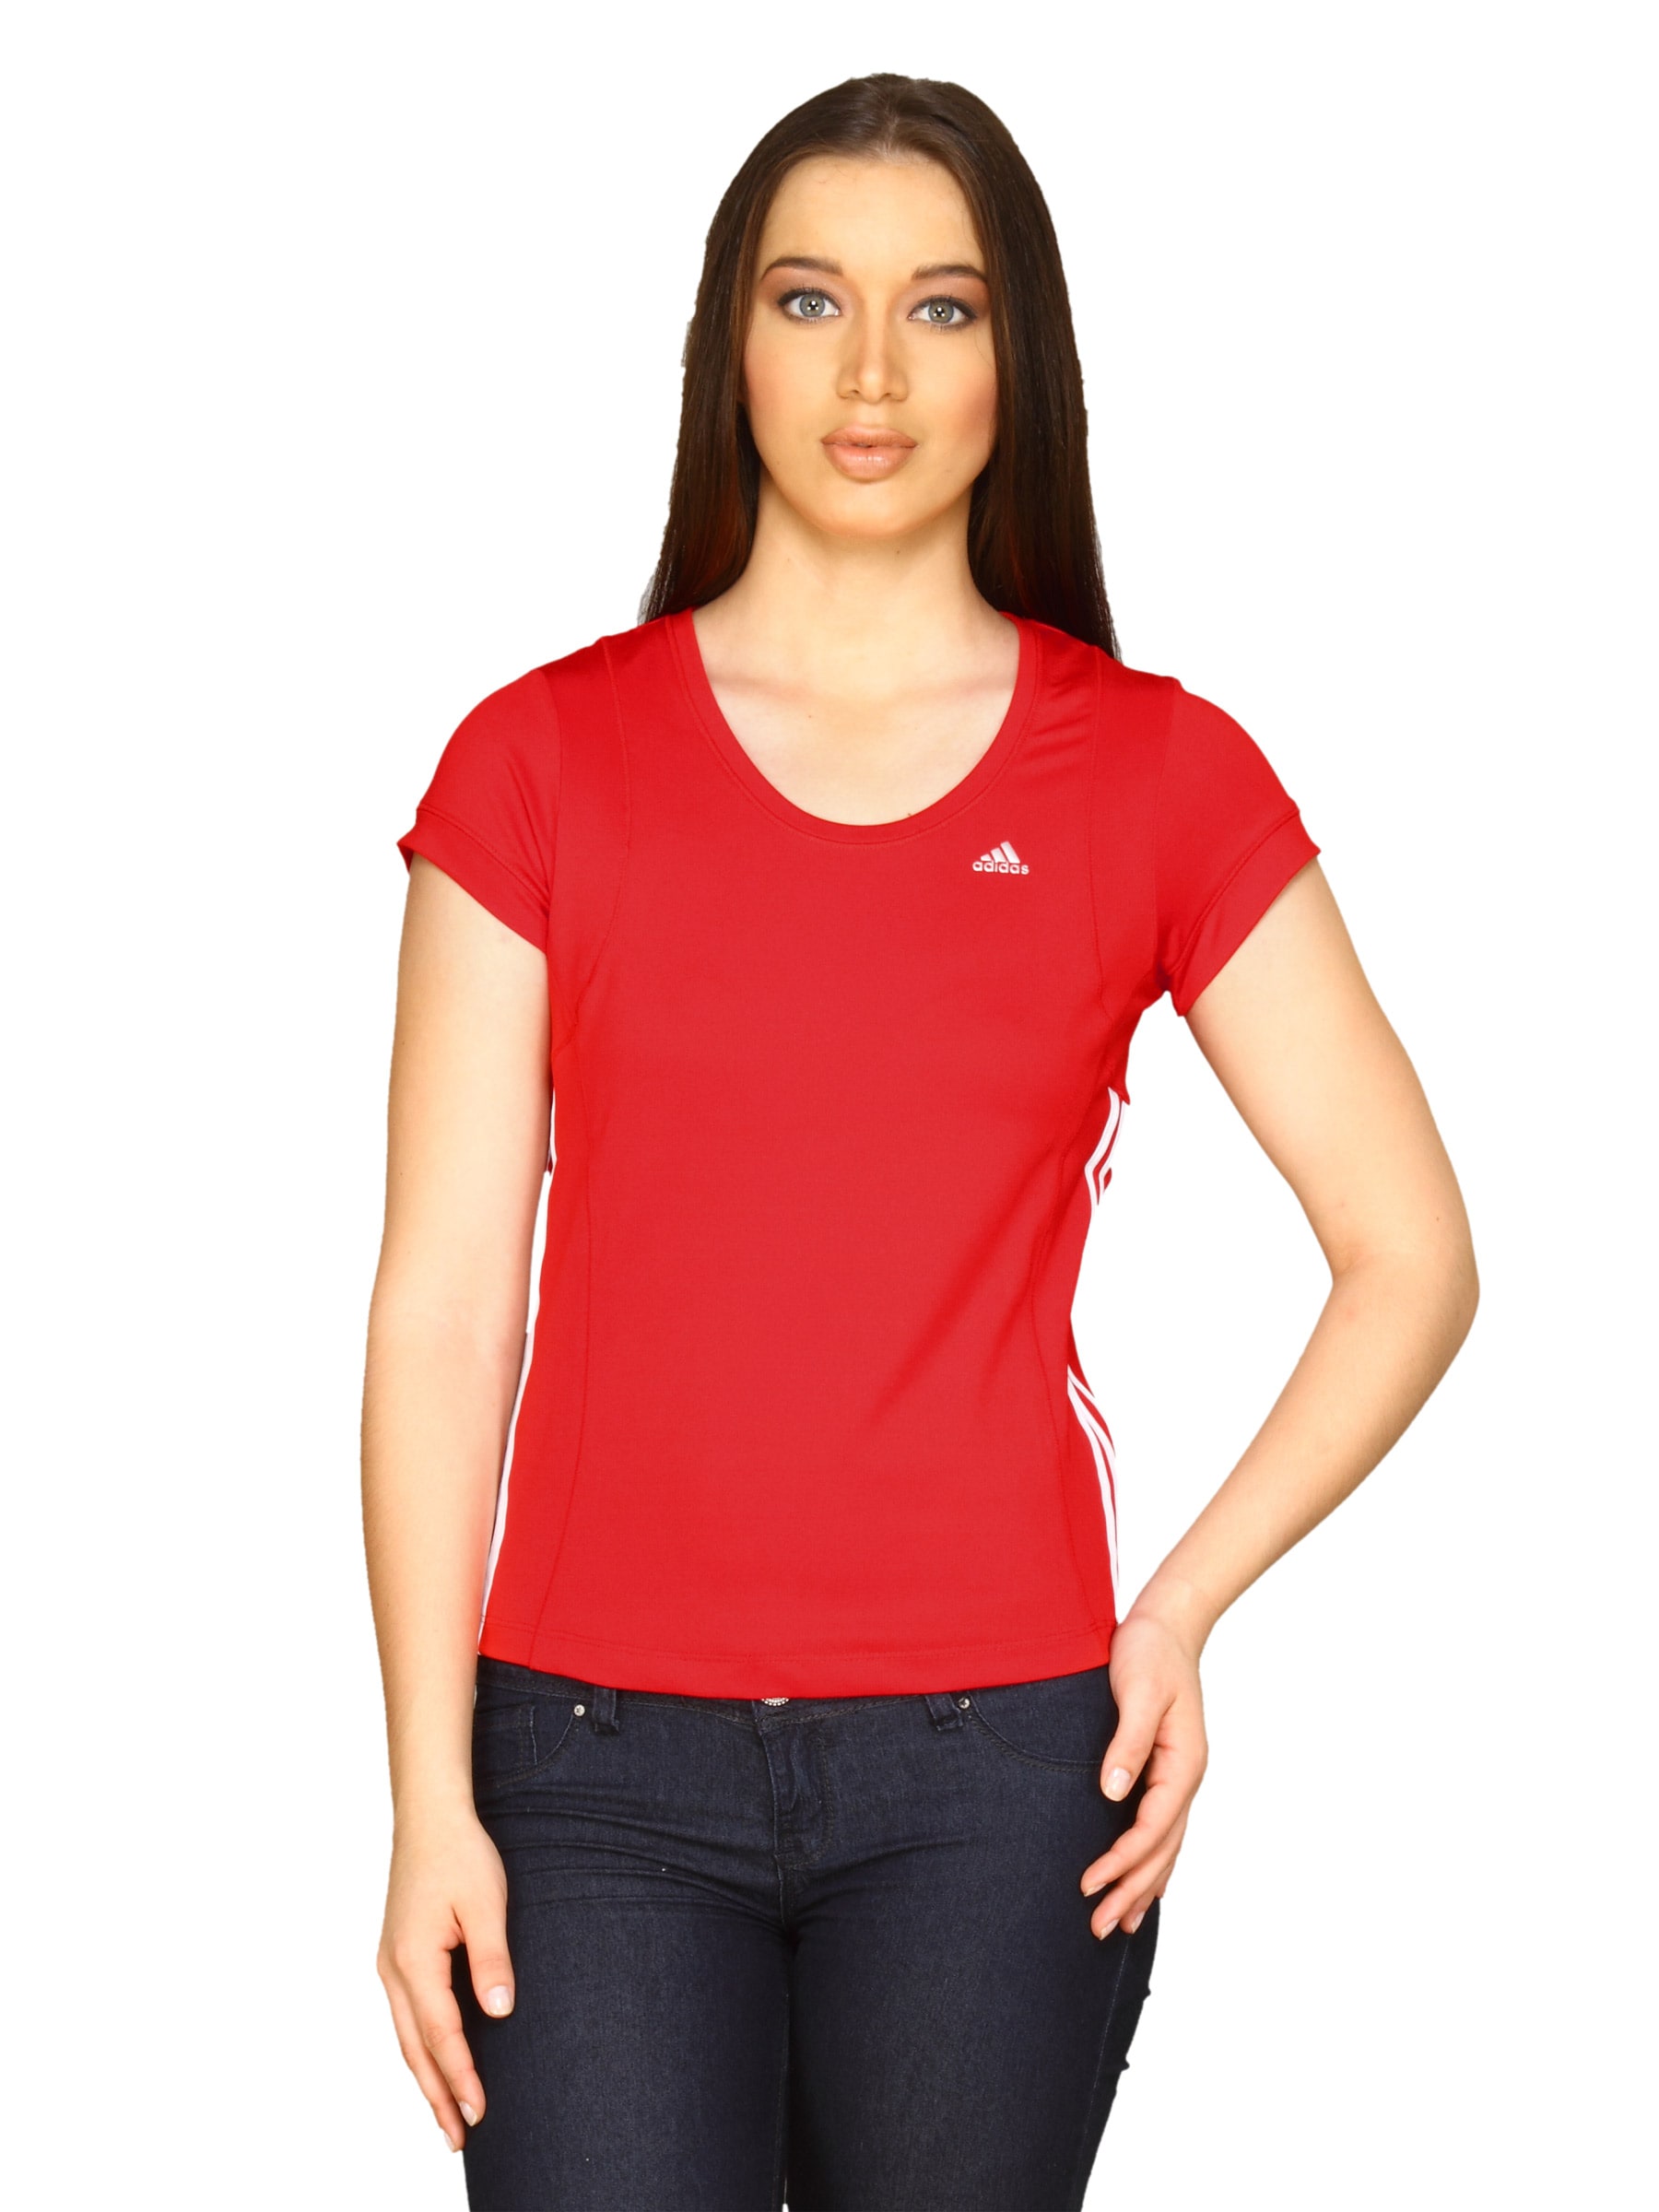 ADIDAS Womens Classic Red T-shirt